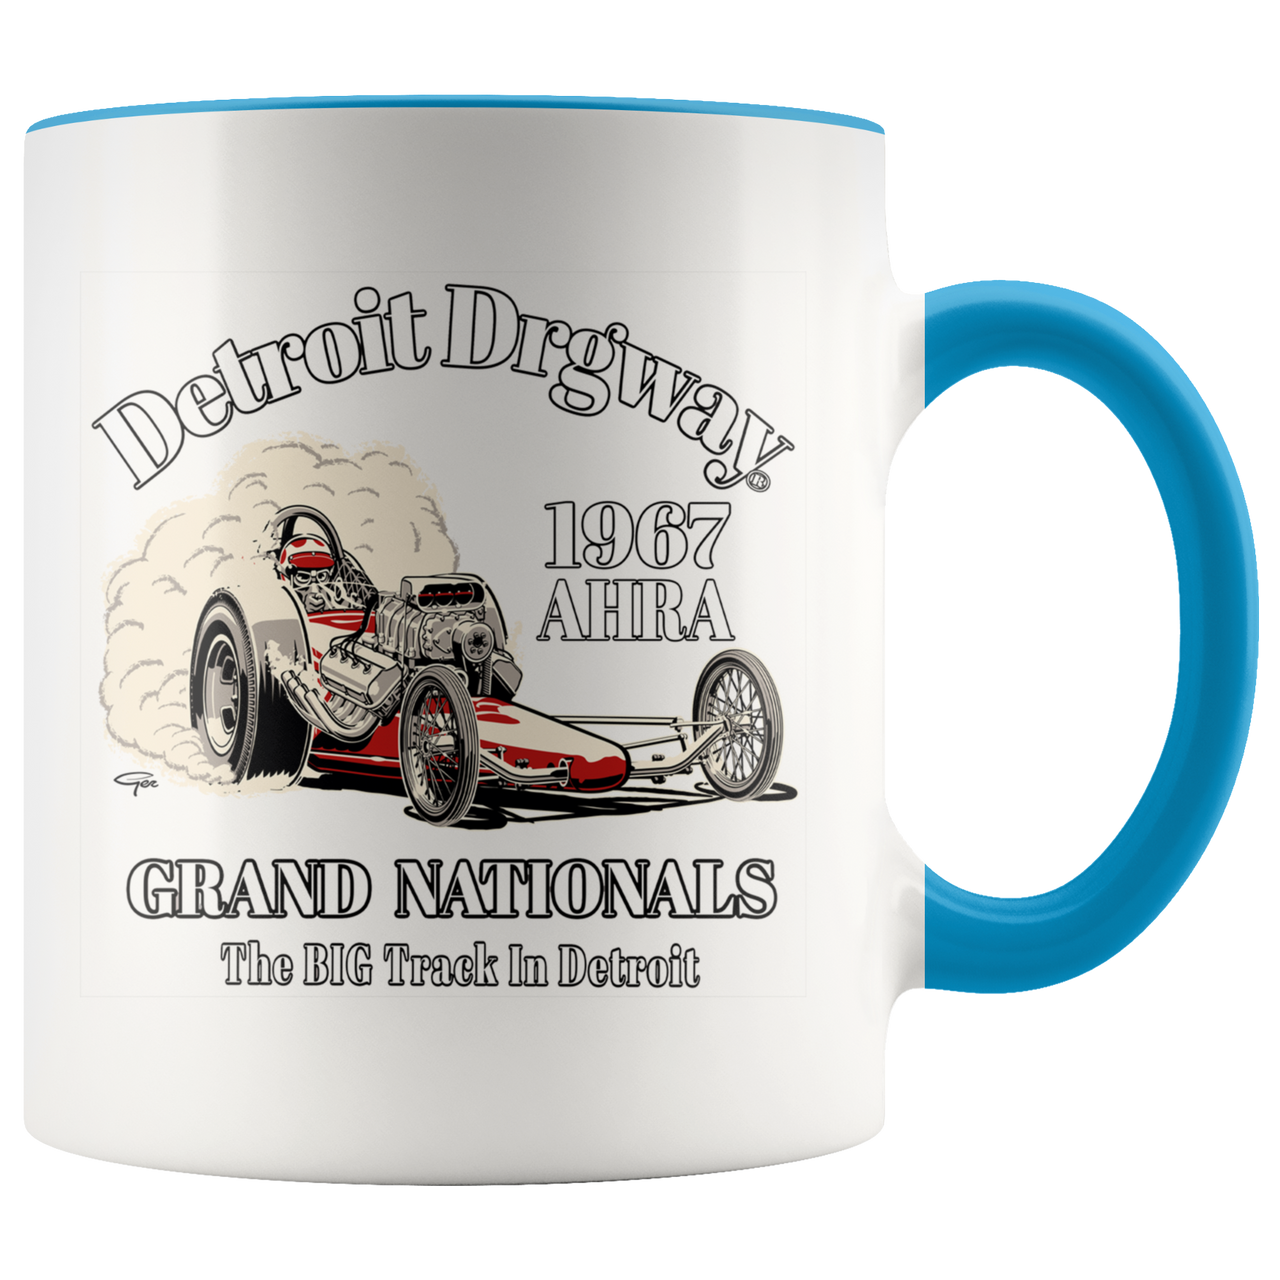 Detroit Dragway® 1967 Grand Nationals Accent Mug